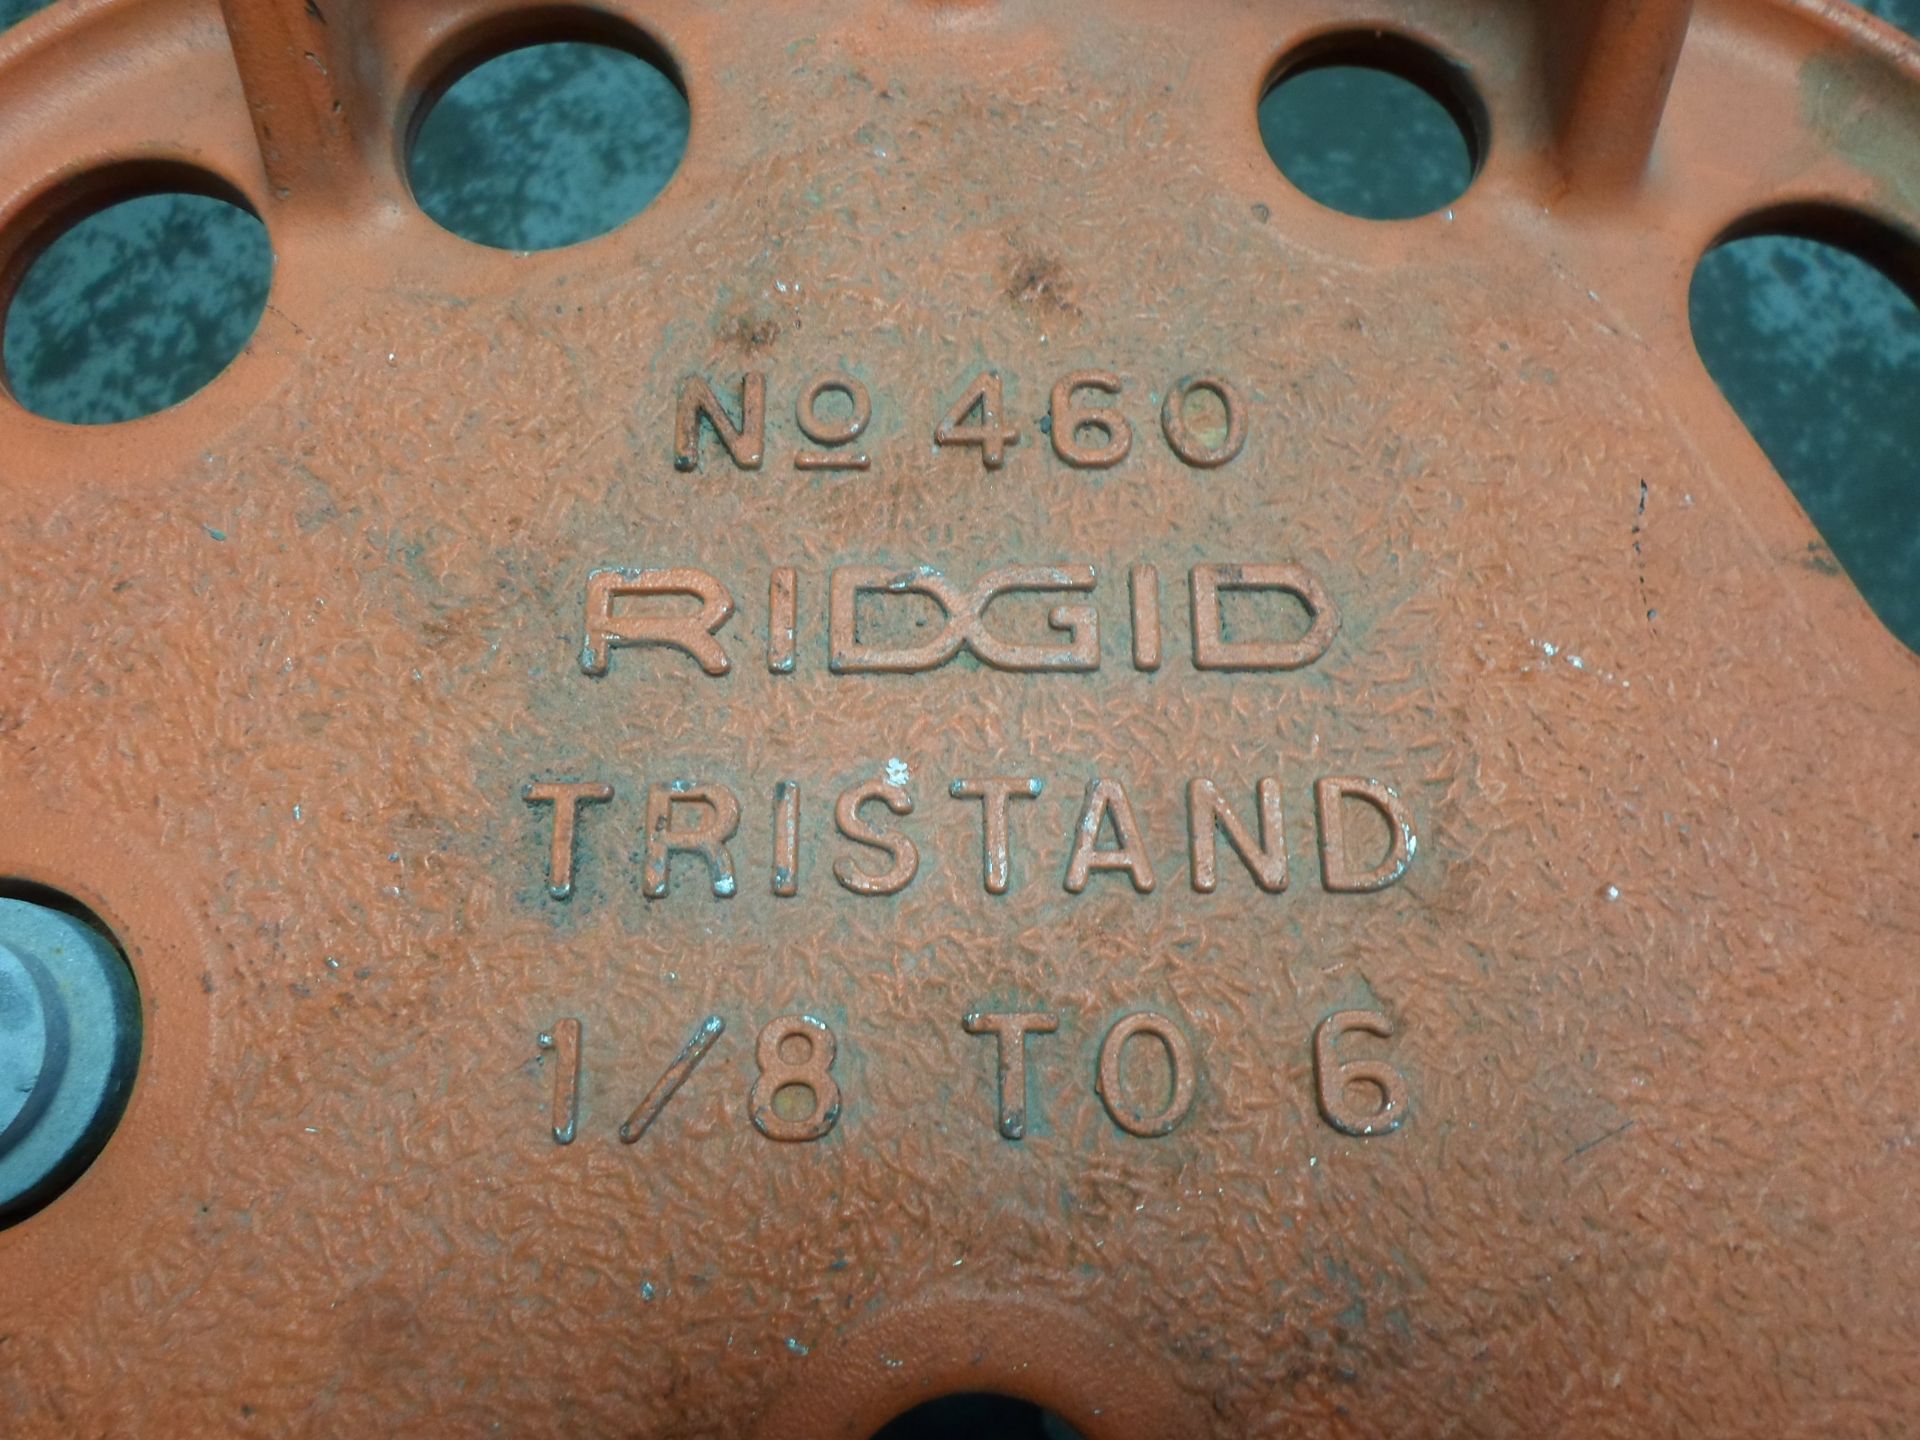 RIDGID TRISTAND 1/8 TO 6" - Image 2 of 3